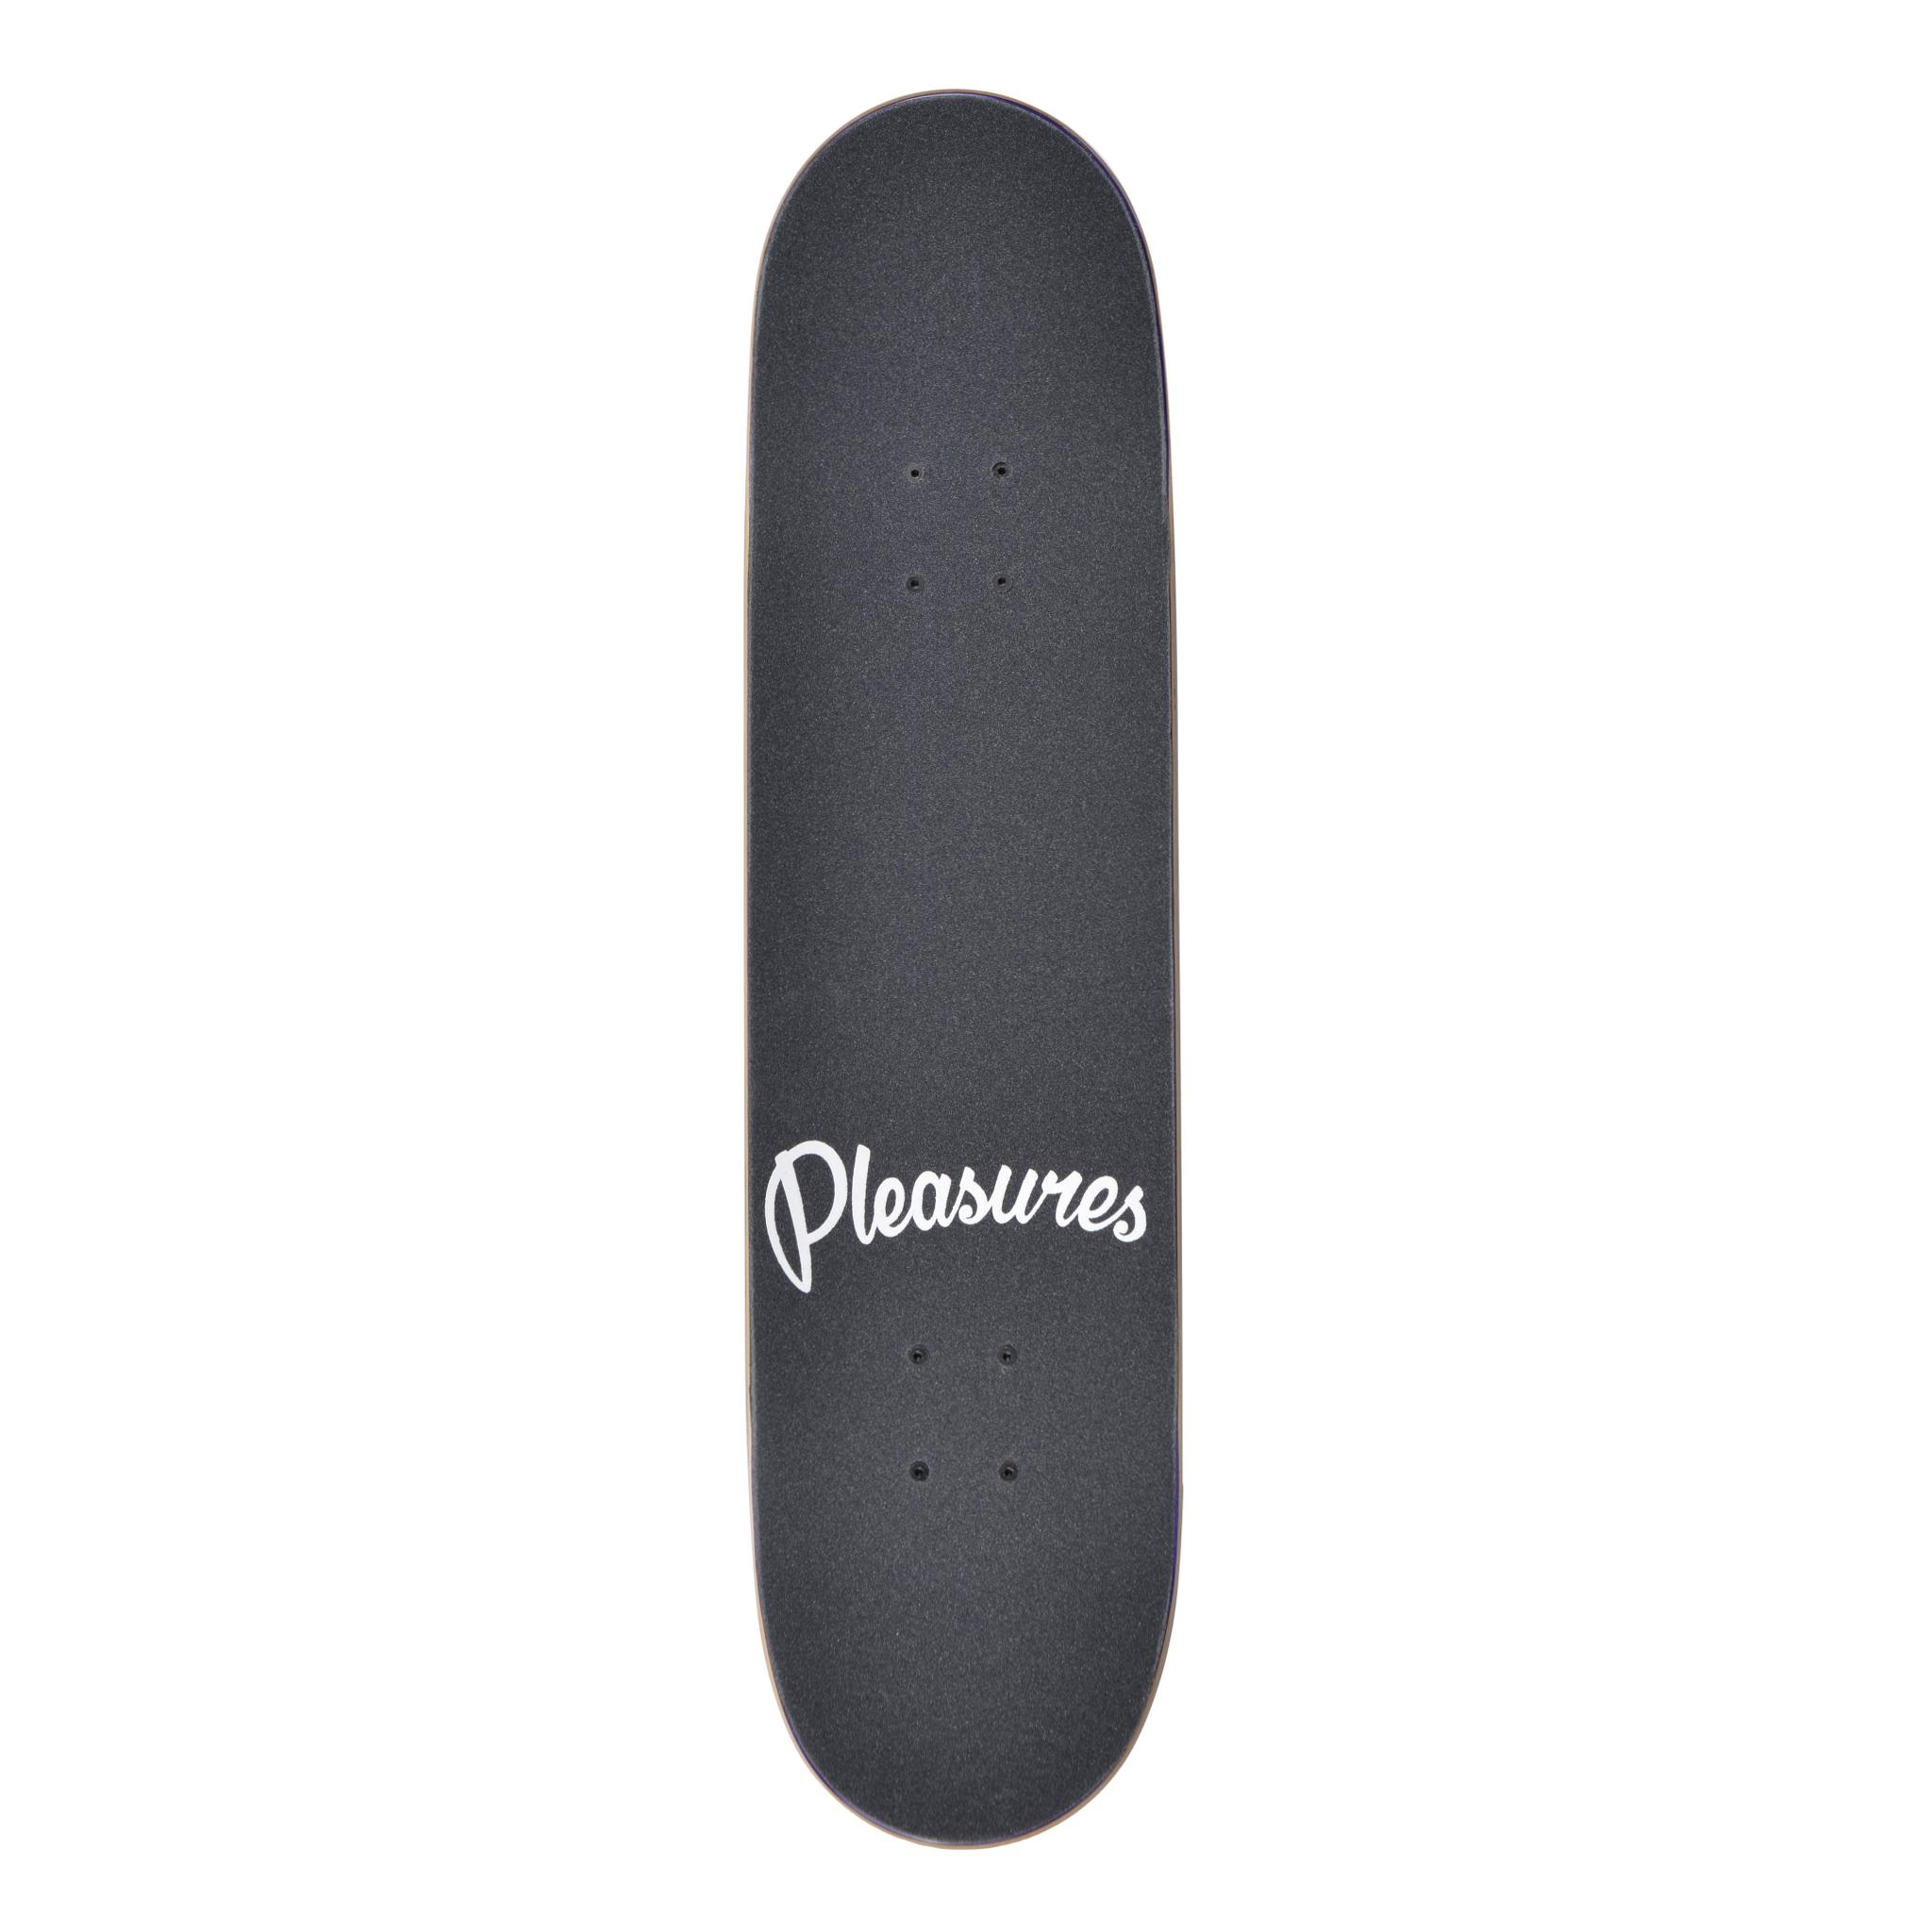 Pleasures skateboards Kill Them All pro completo